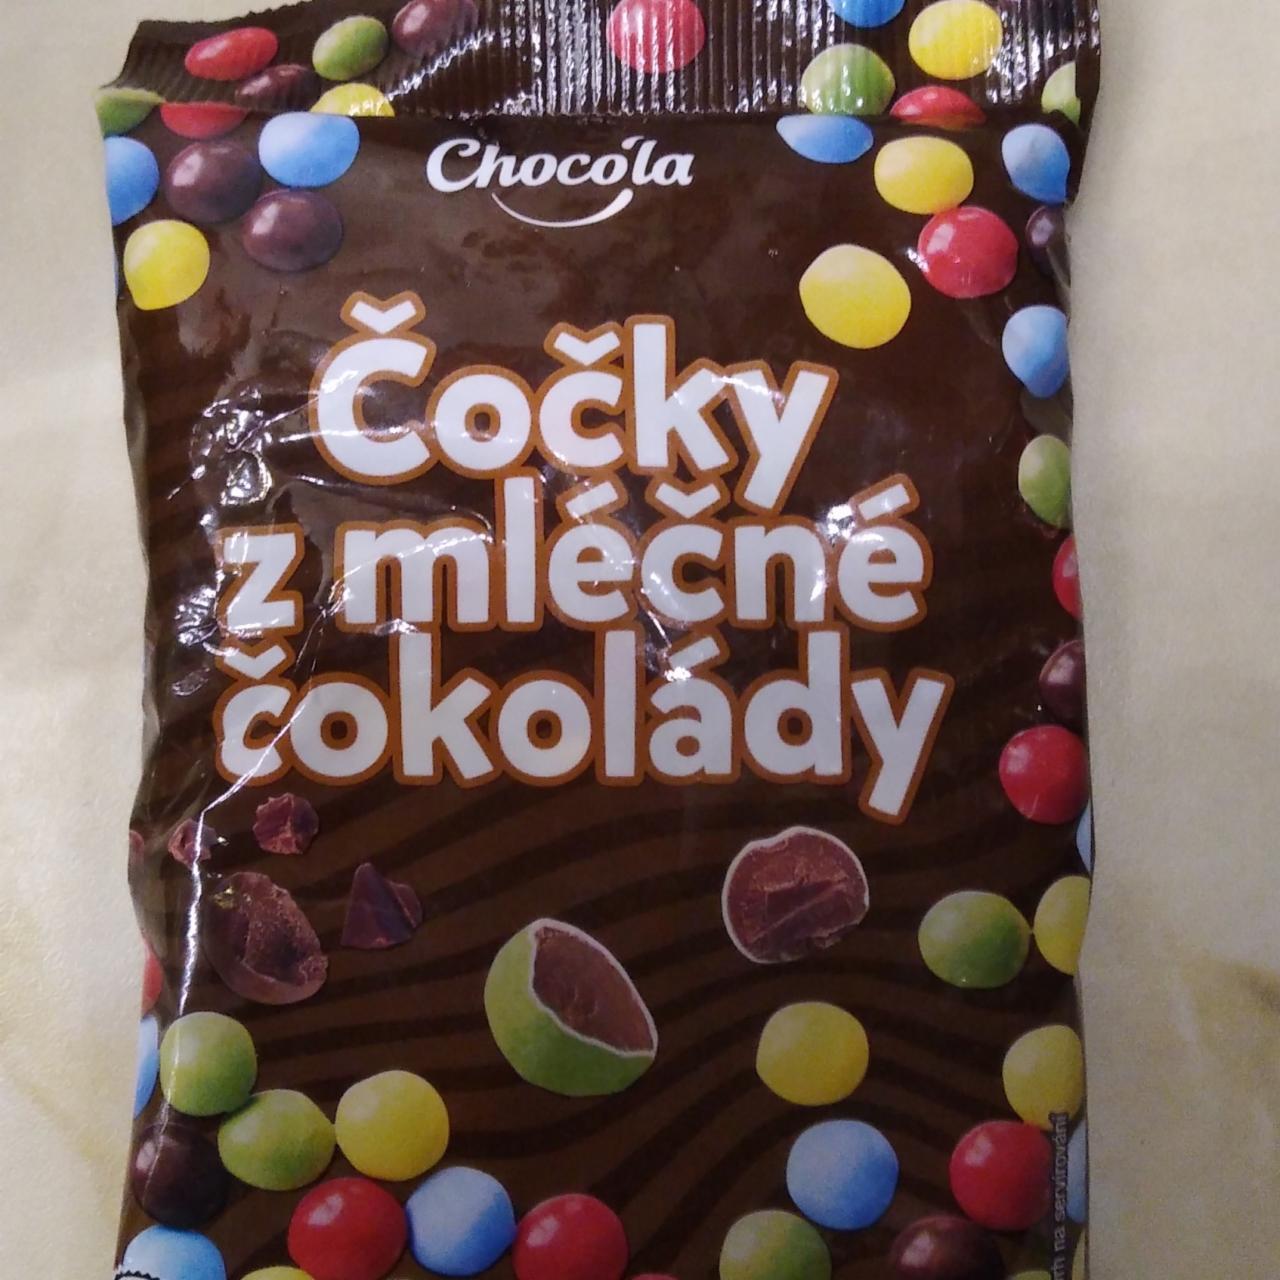 Фото - Cocky z mlecne cokolady Chocola